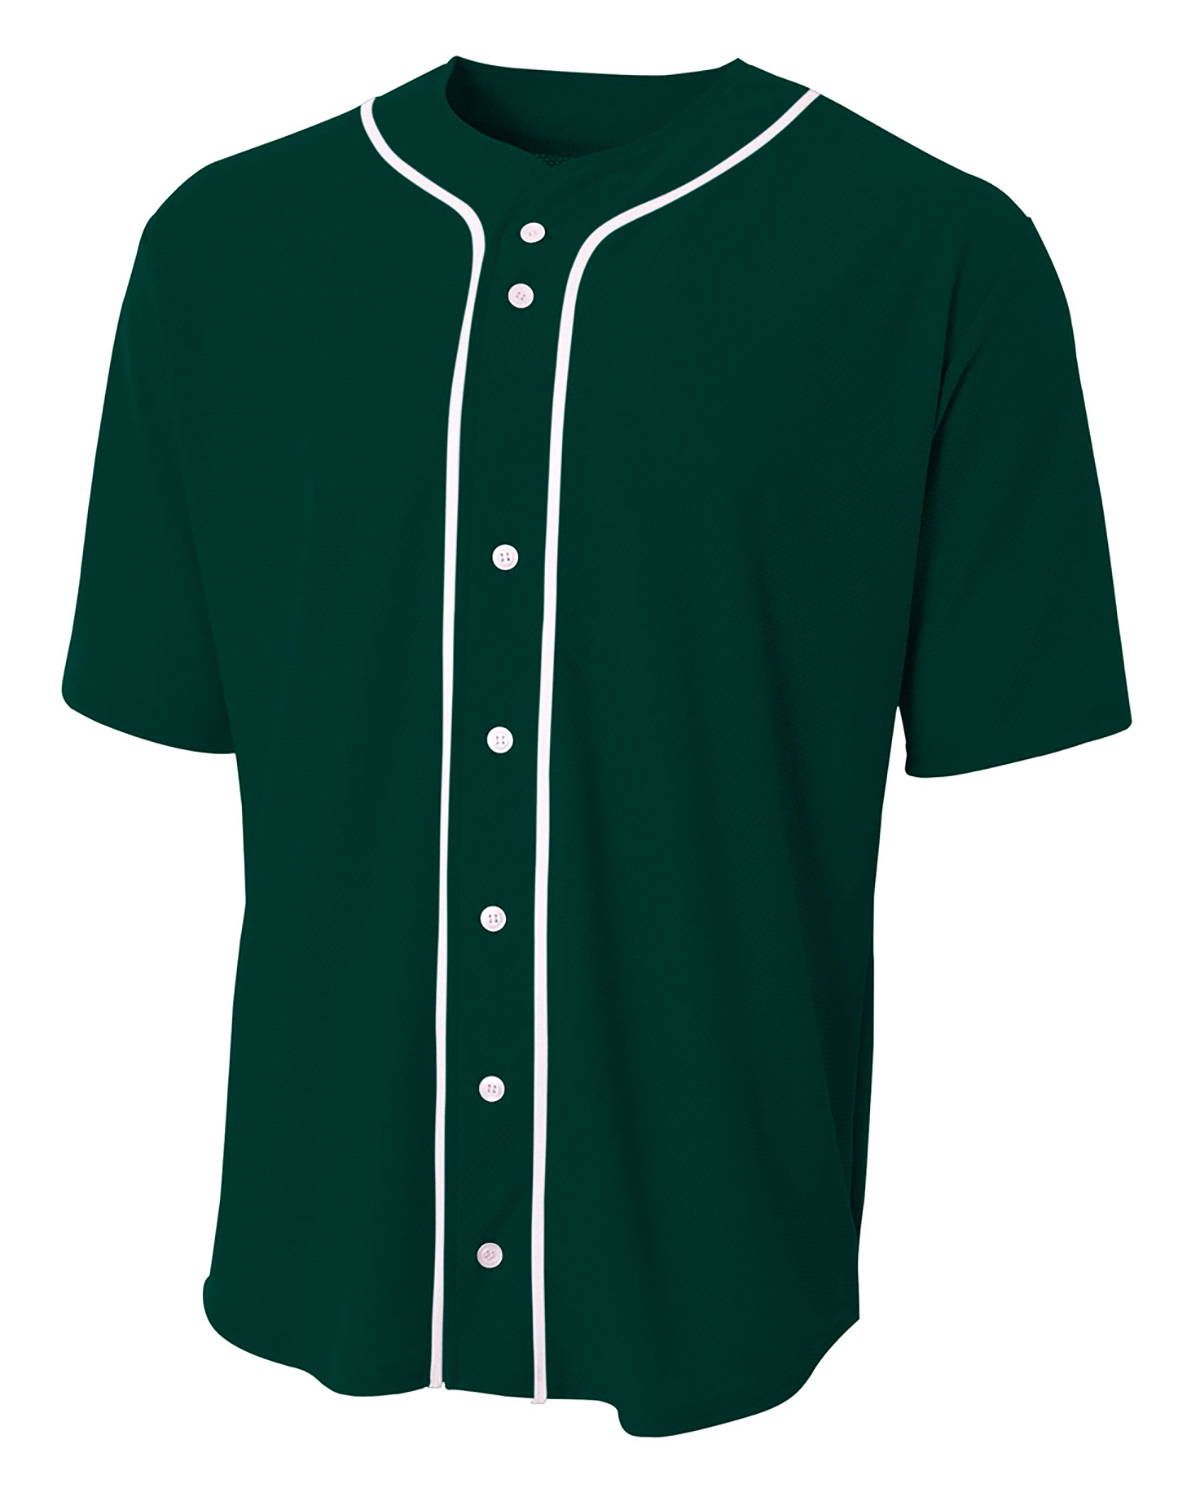 N4184 A4 Shorts Sleeve Full Button Baseball Top